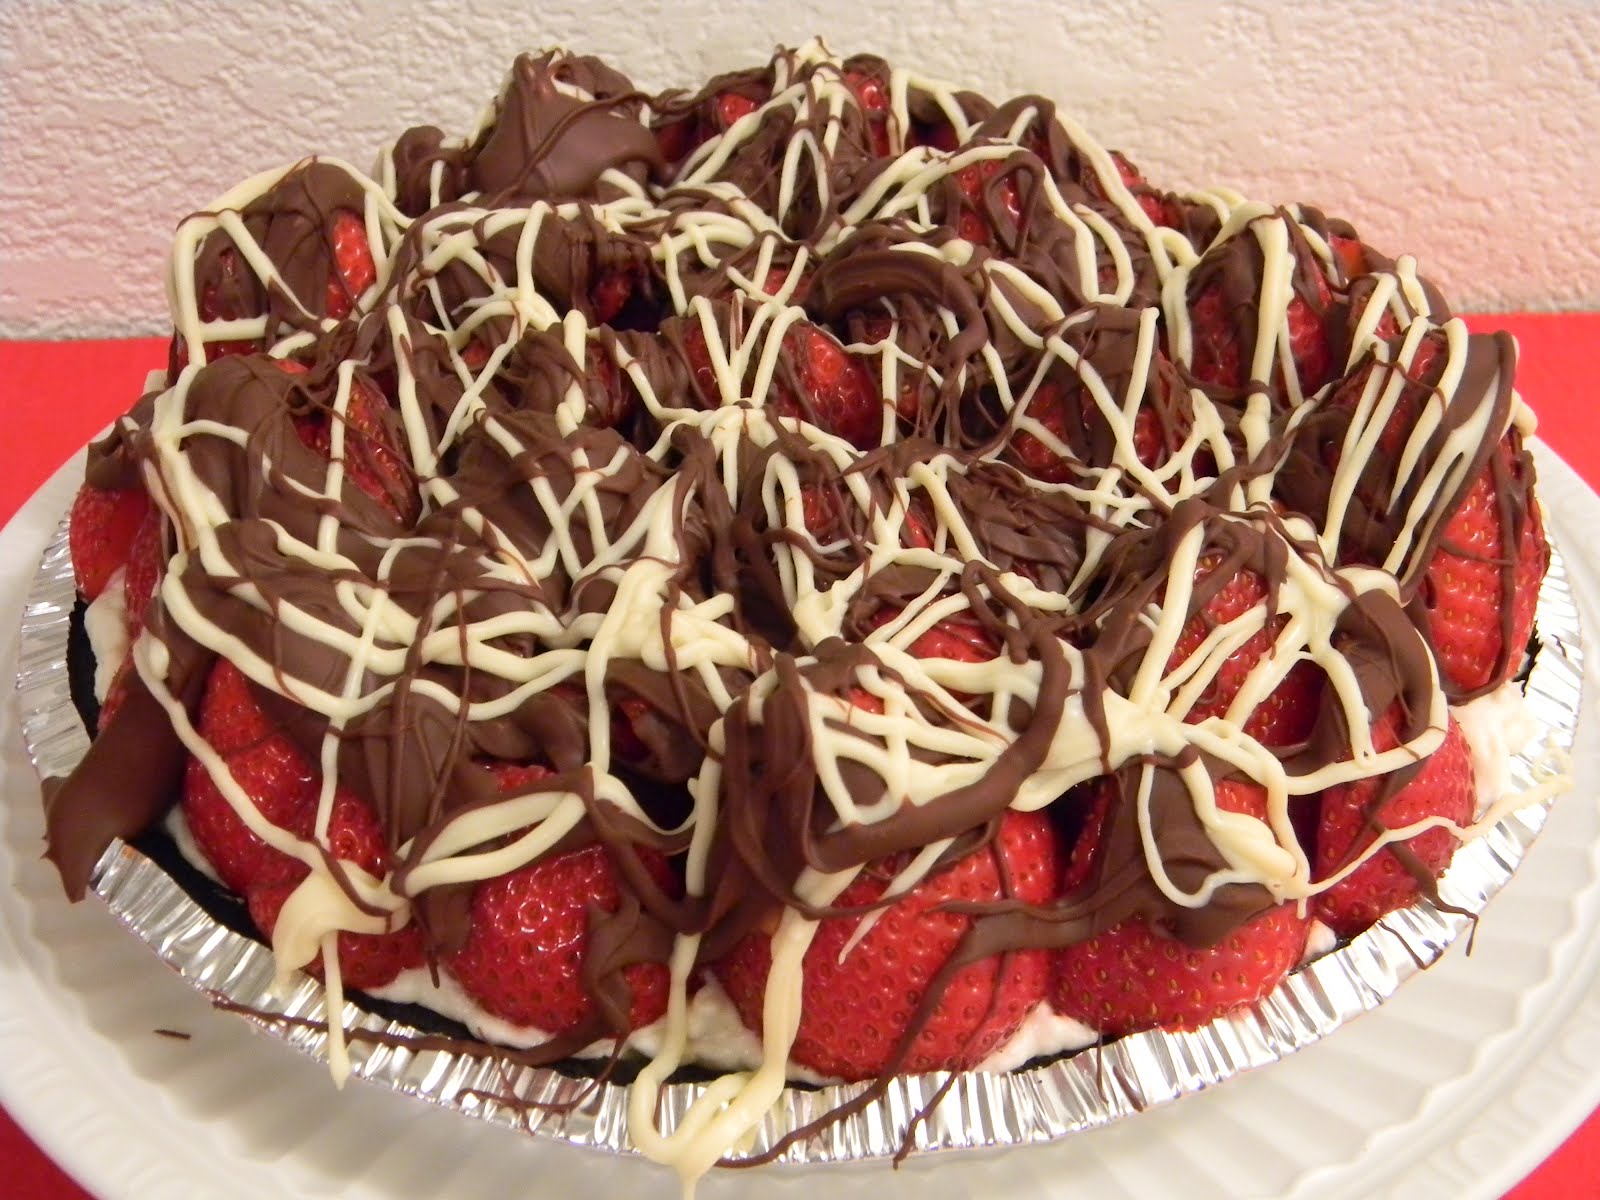 chocolate cake recipe with strawberries Chocolate Covered Strawberry Pie